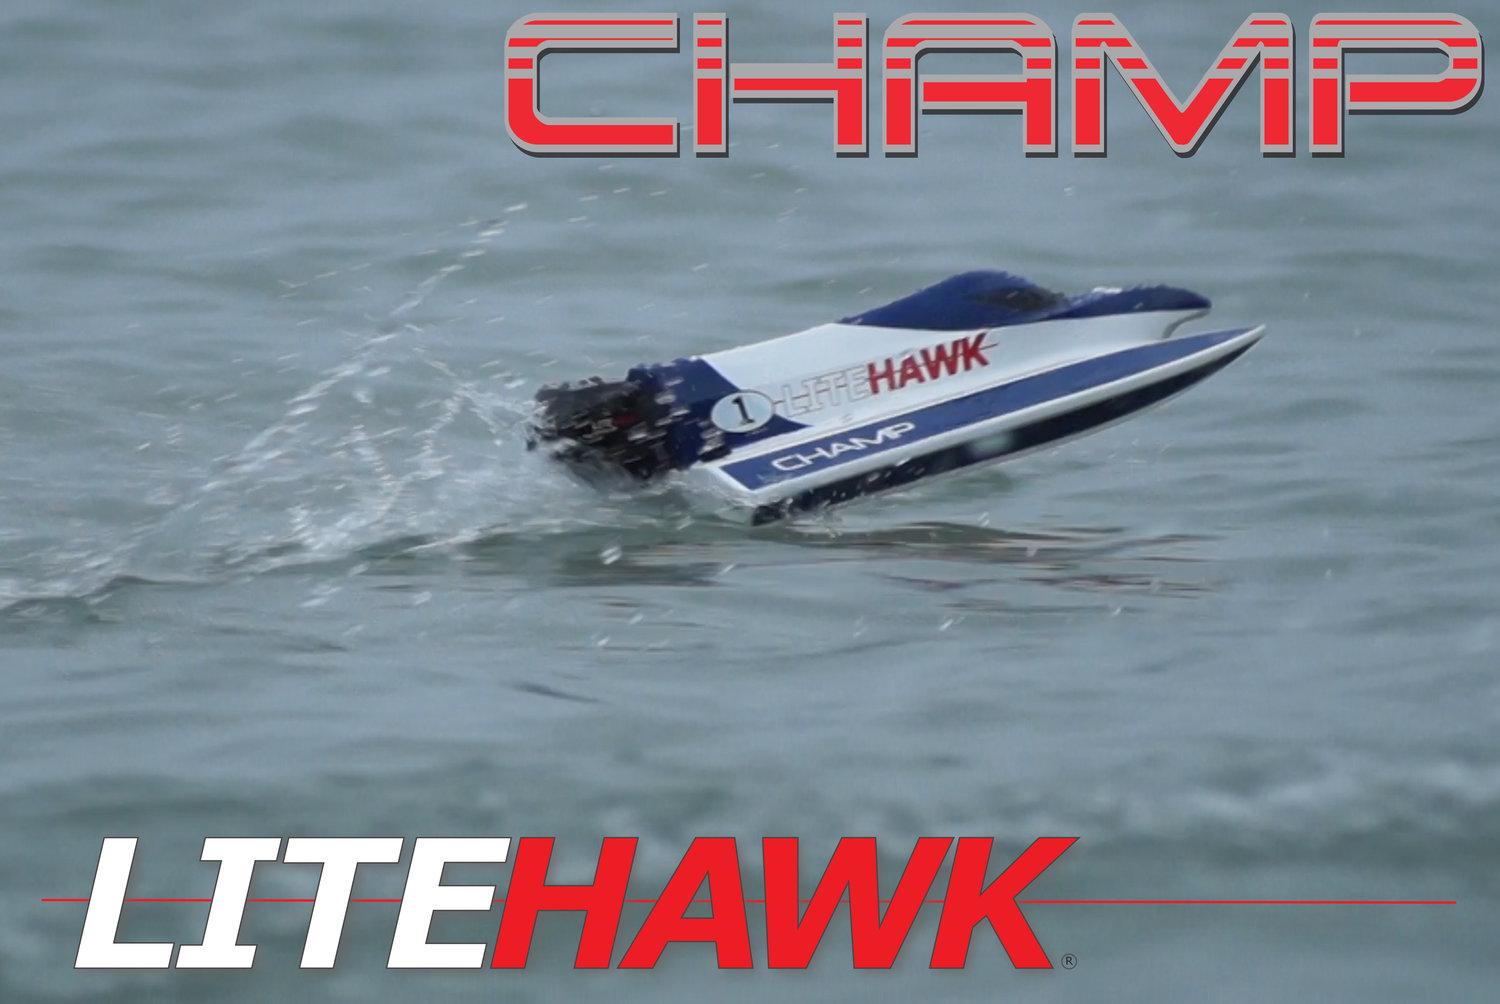 Litehawk Champ Rc Boat: Sleek and Dynamic Design